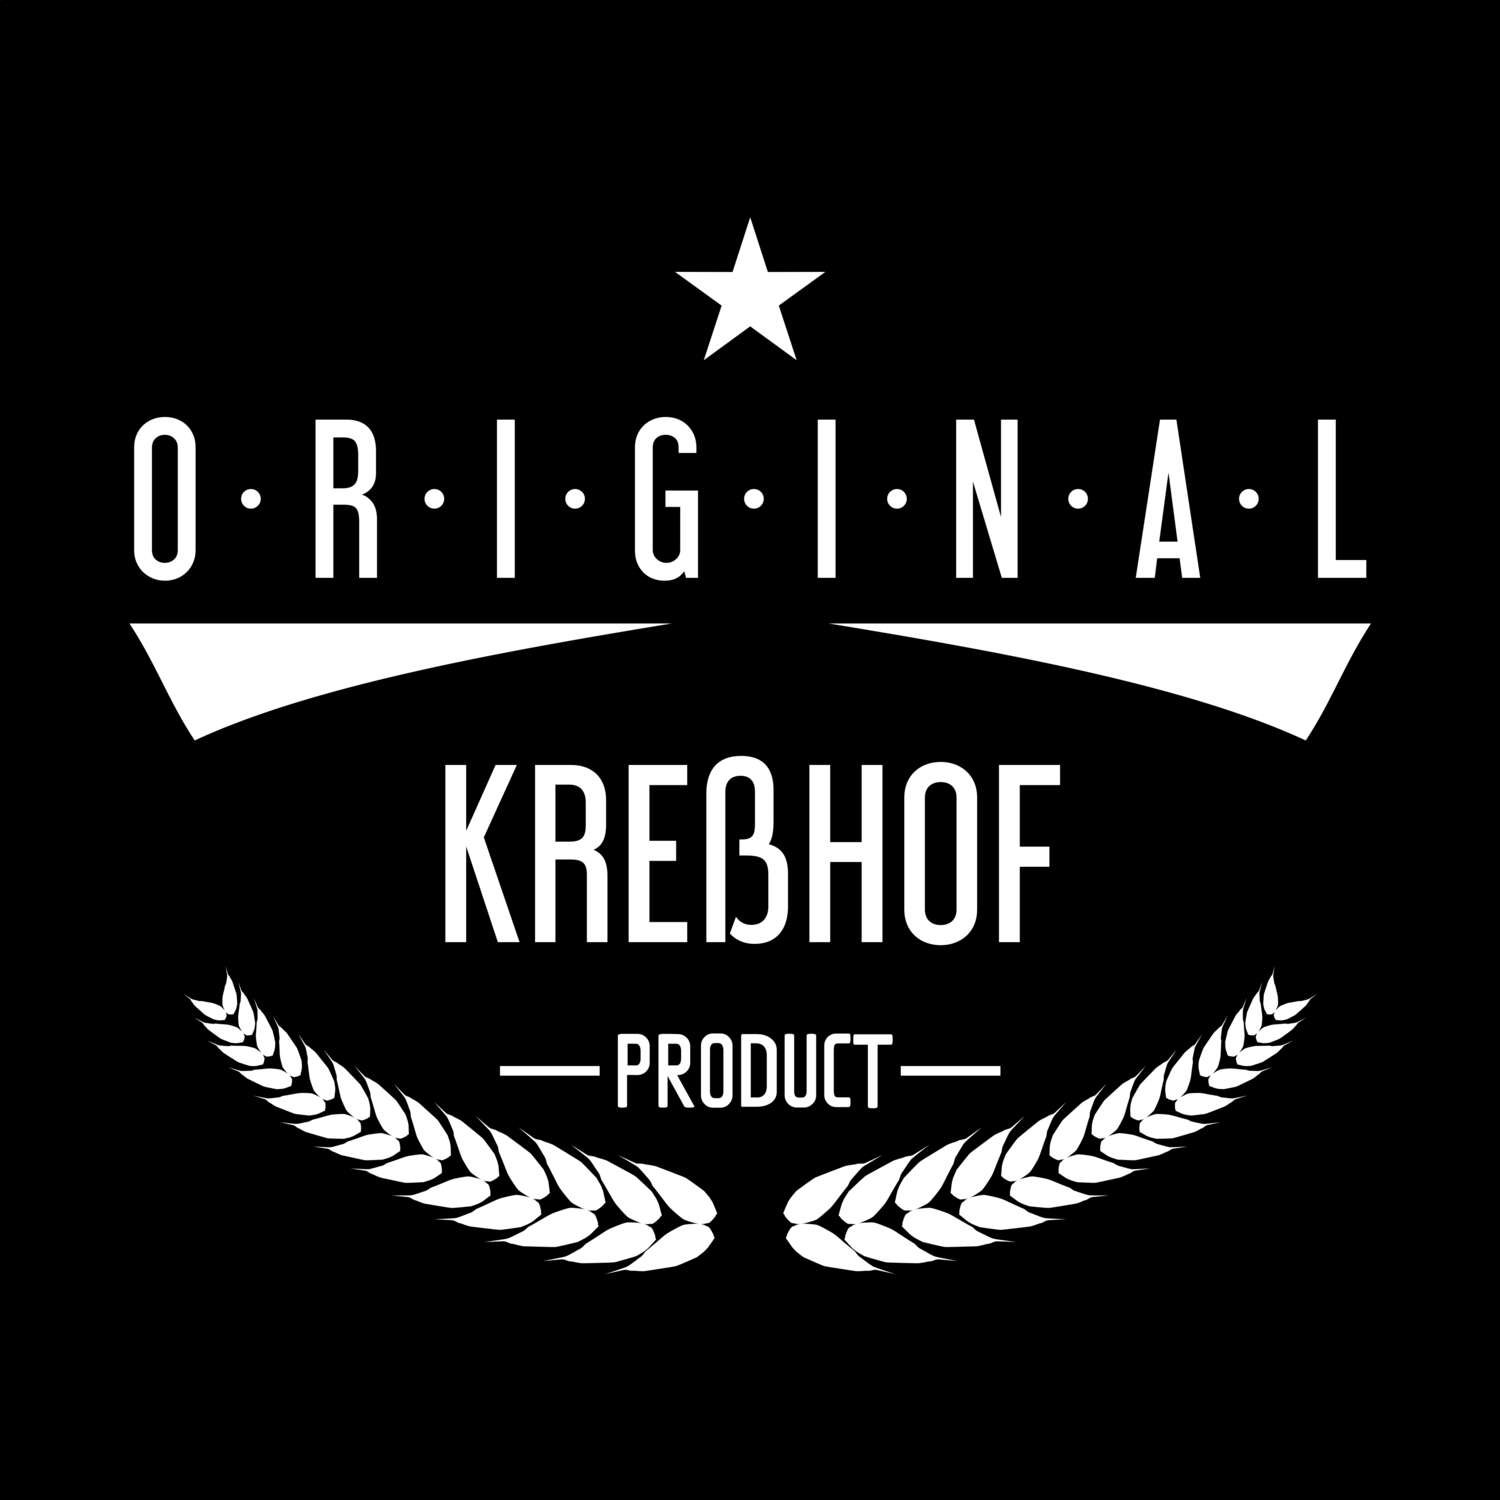 Kreßhof T-Shirt »Original Product«